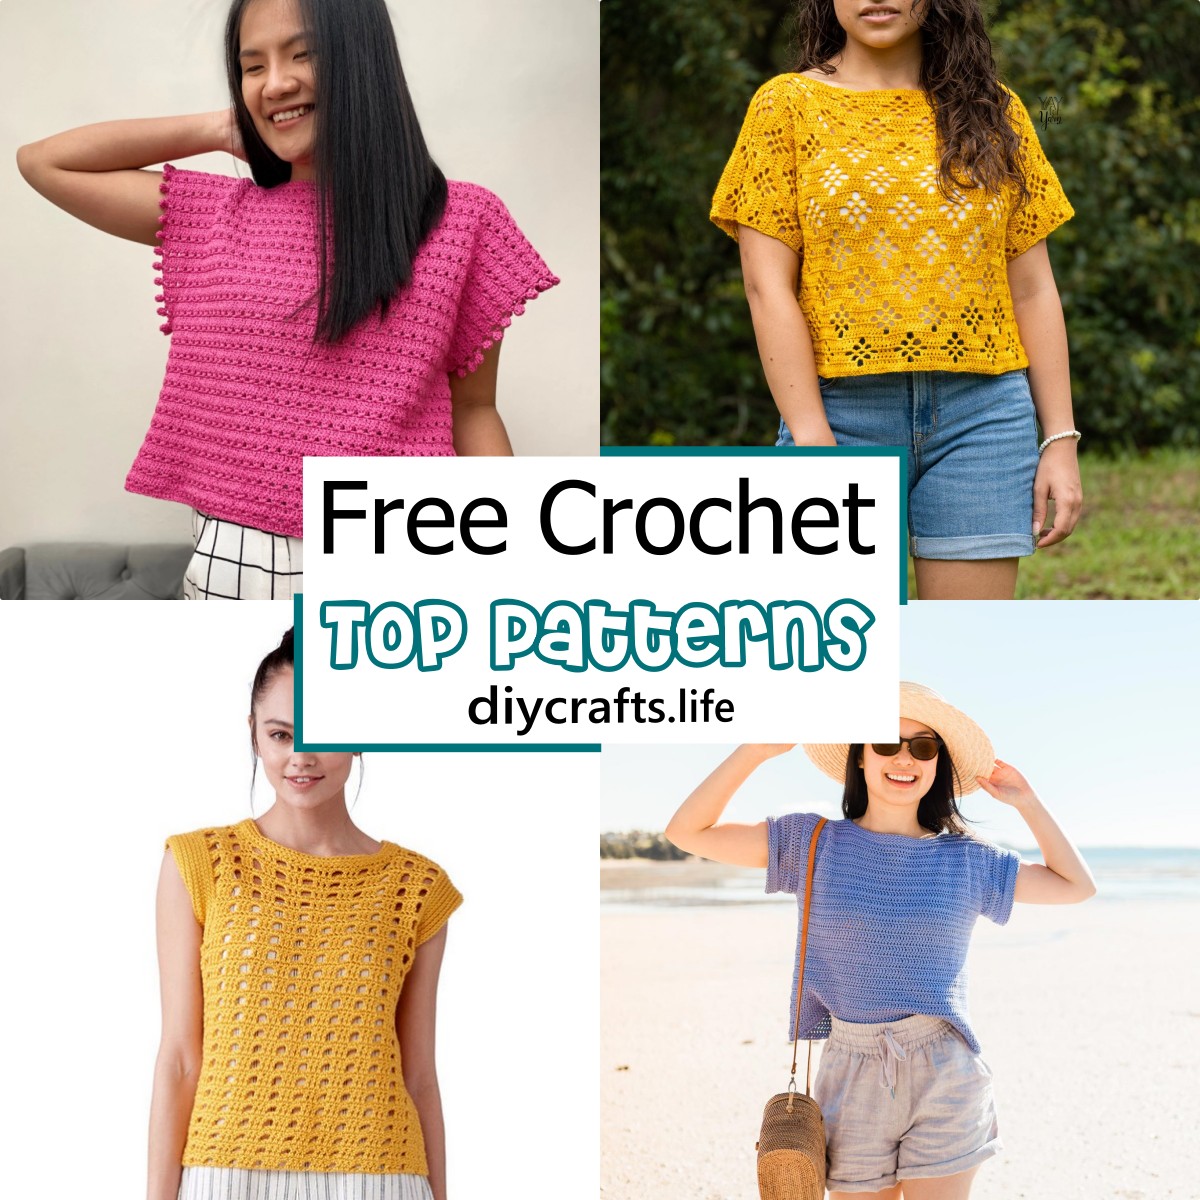 65 Free Crochet Top Patterns For Summer - DIY Crafts